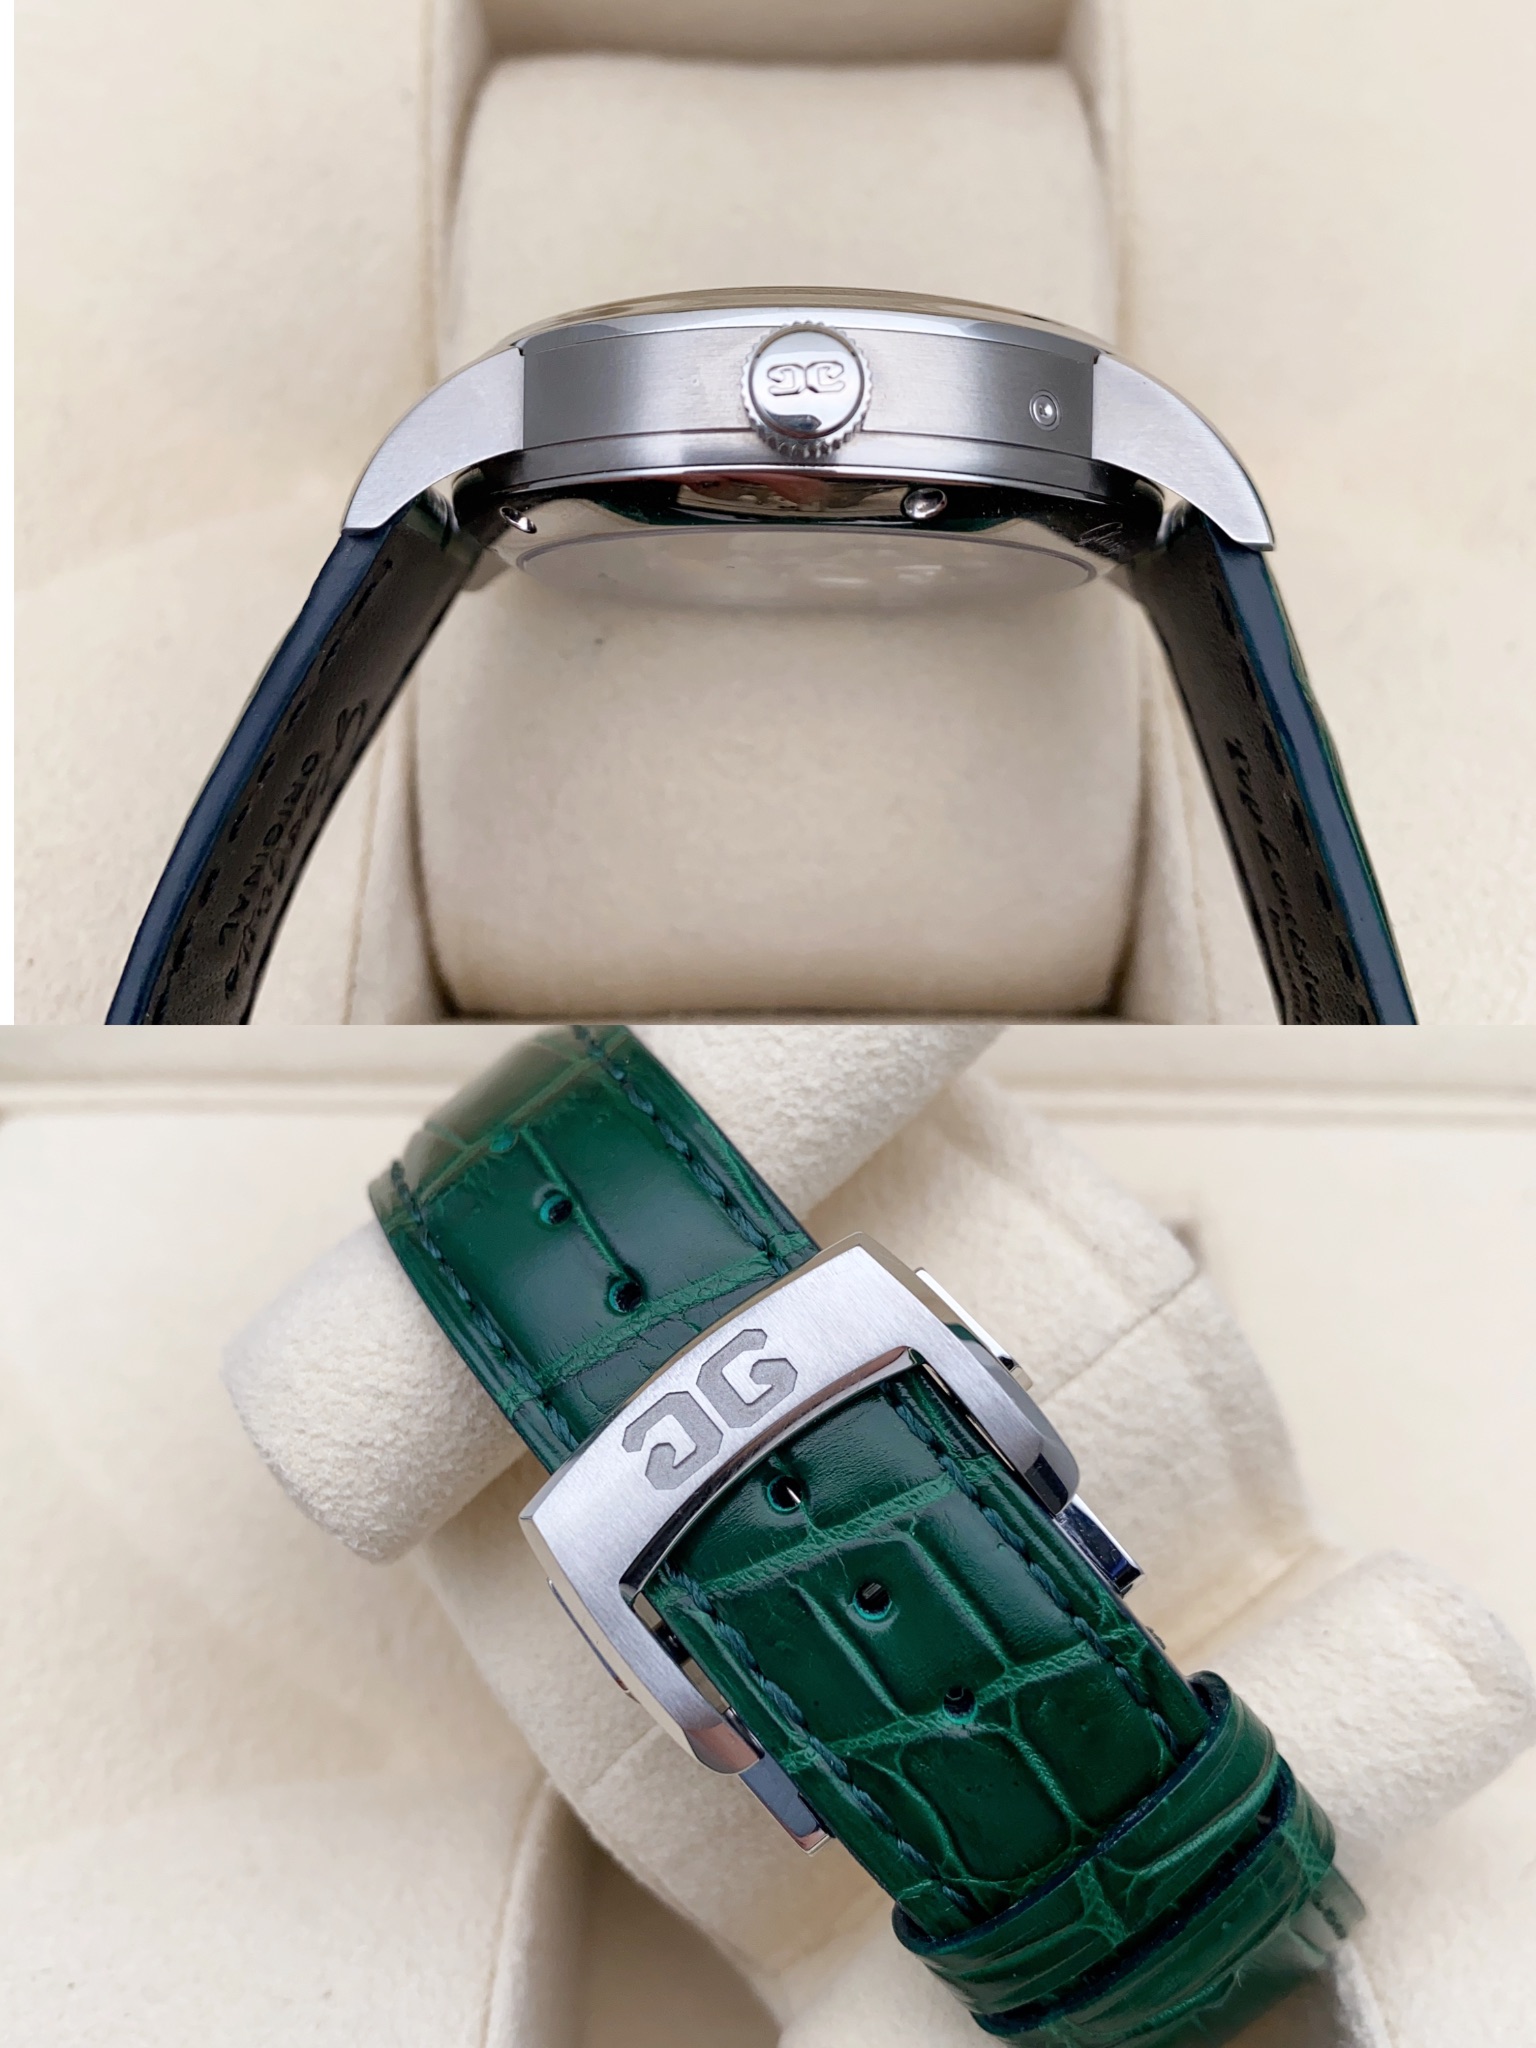 Glashutte Original Eccentric Series 1-90-02-13-32-62 Men's Automatic Mechanical Watch - Image 6 of 7